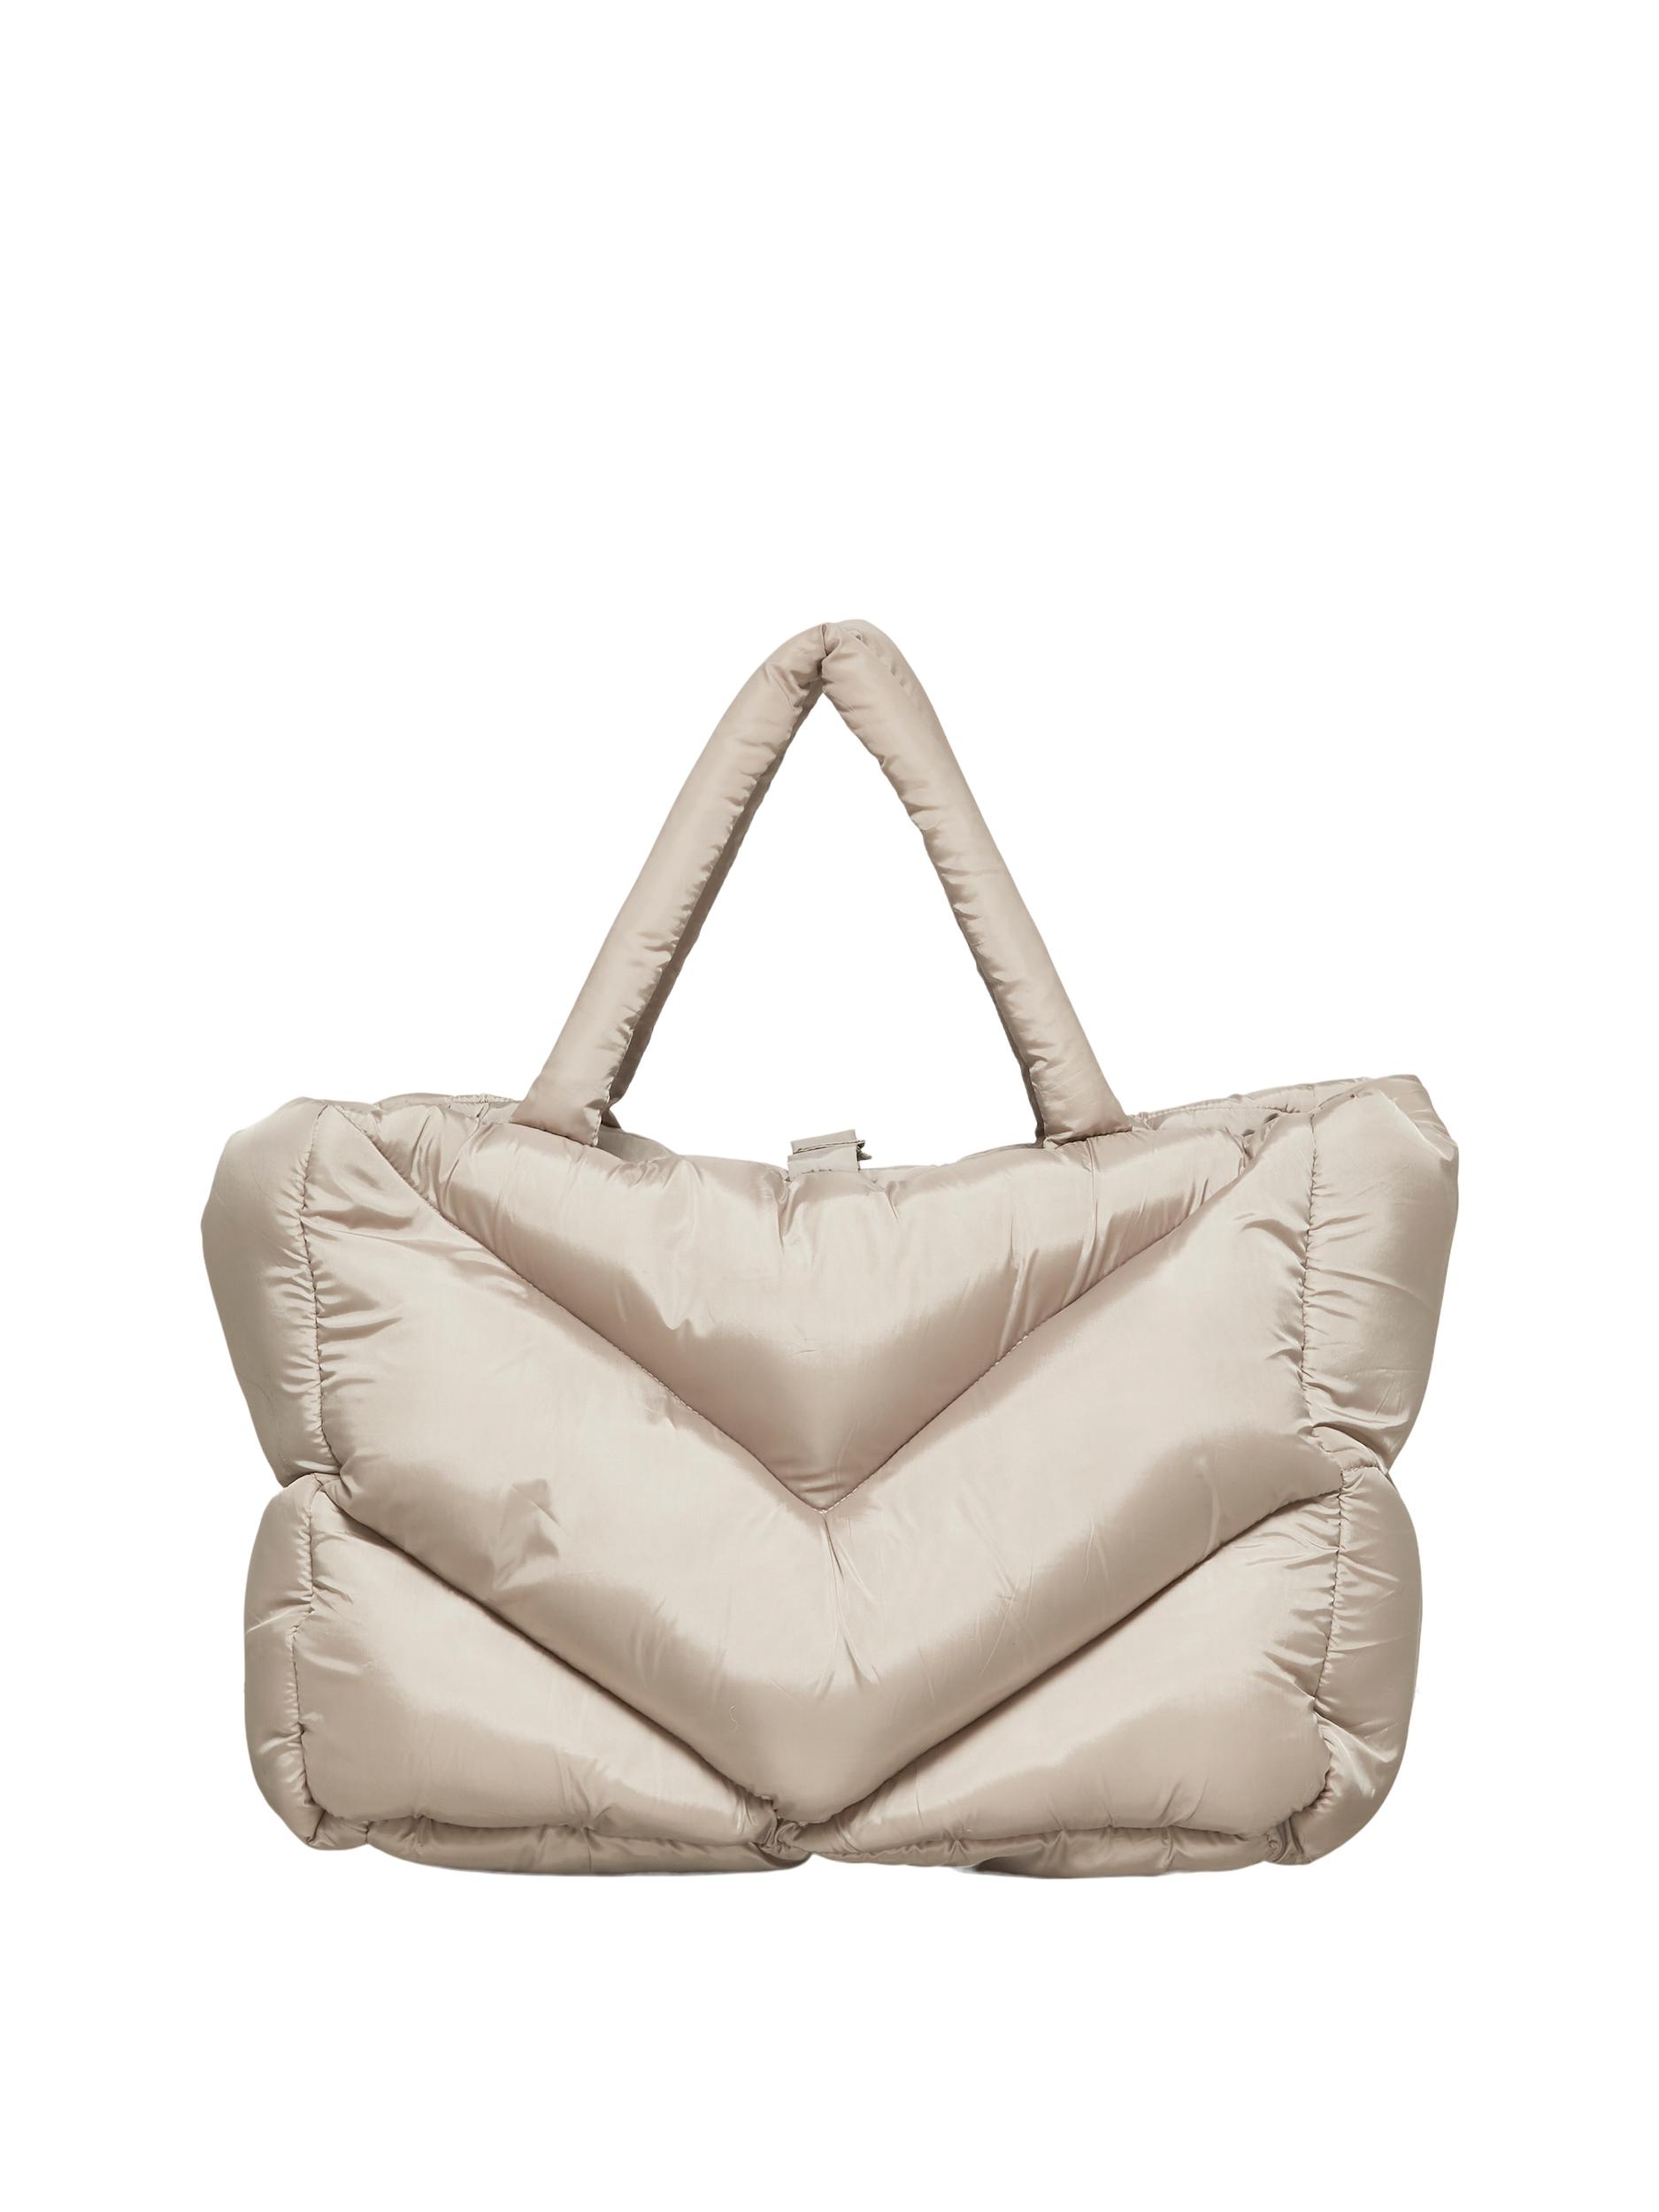 Selected Femme Clara Quilt Bag - Sandshell 